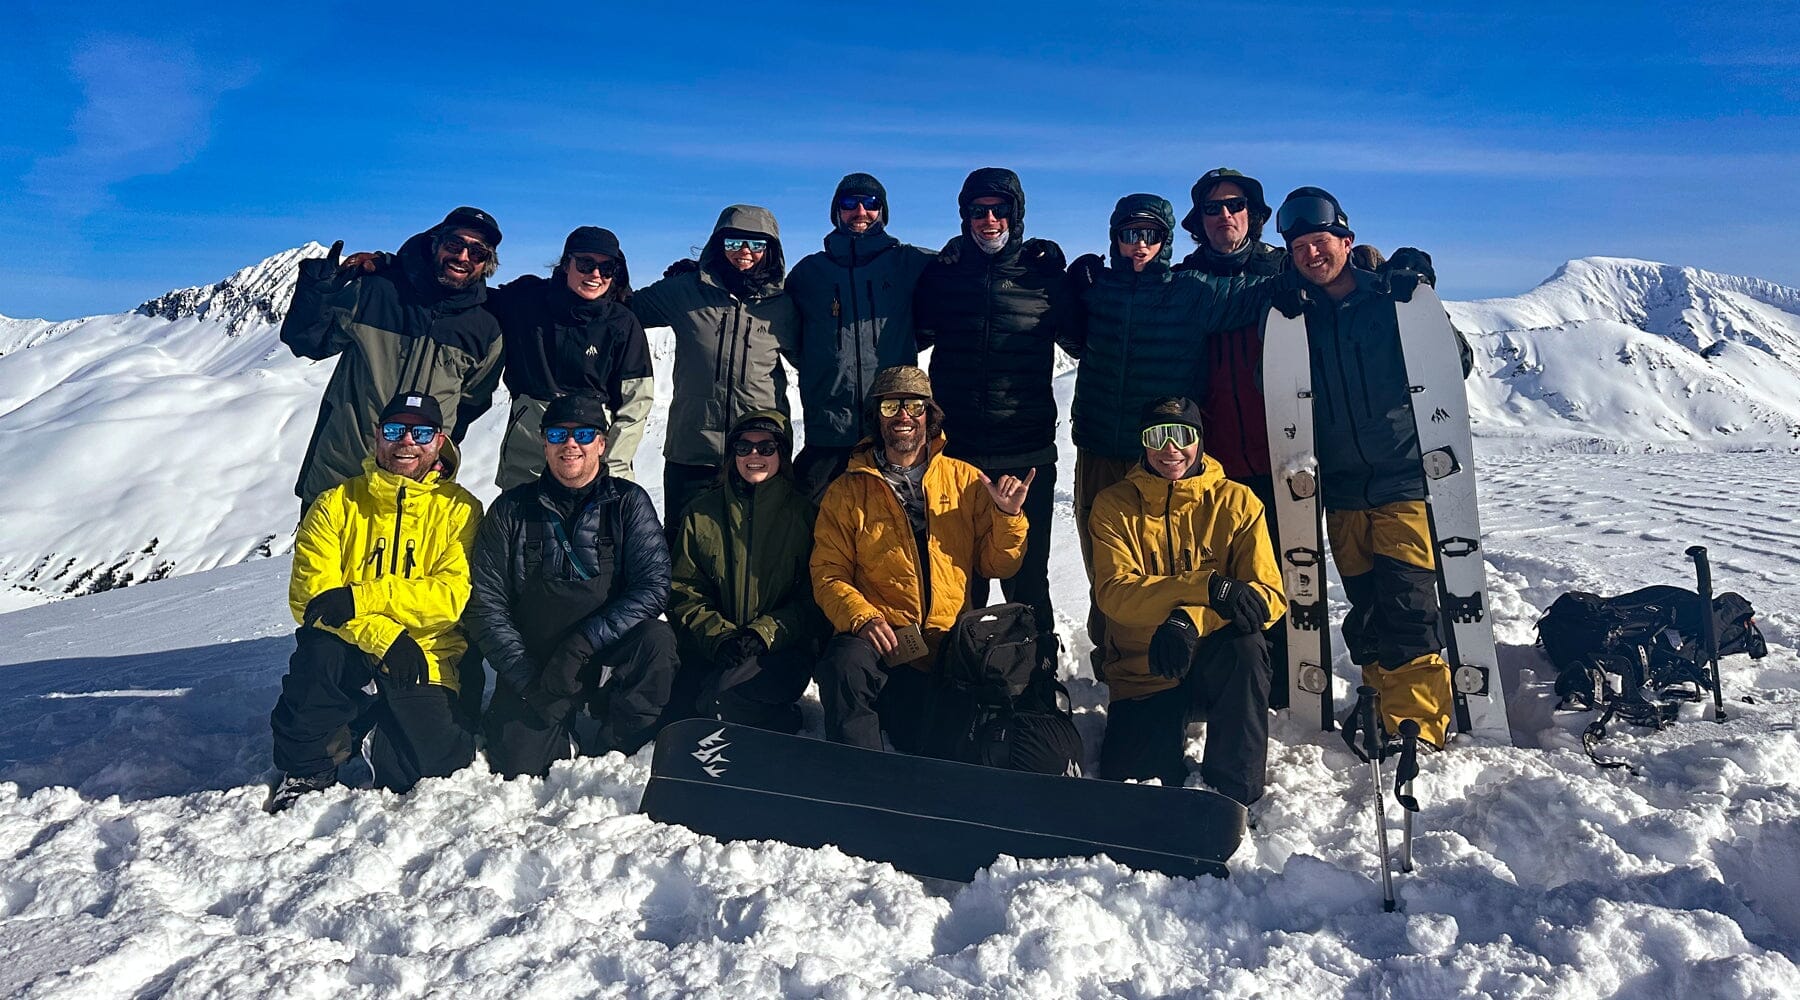 Trip of a Lifetime - Whitecap Alpine with Jones Snowboards